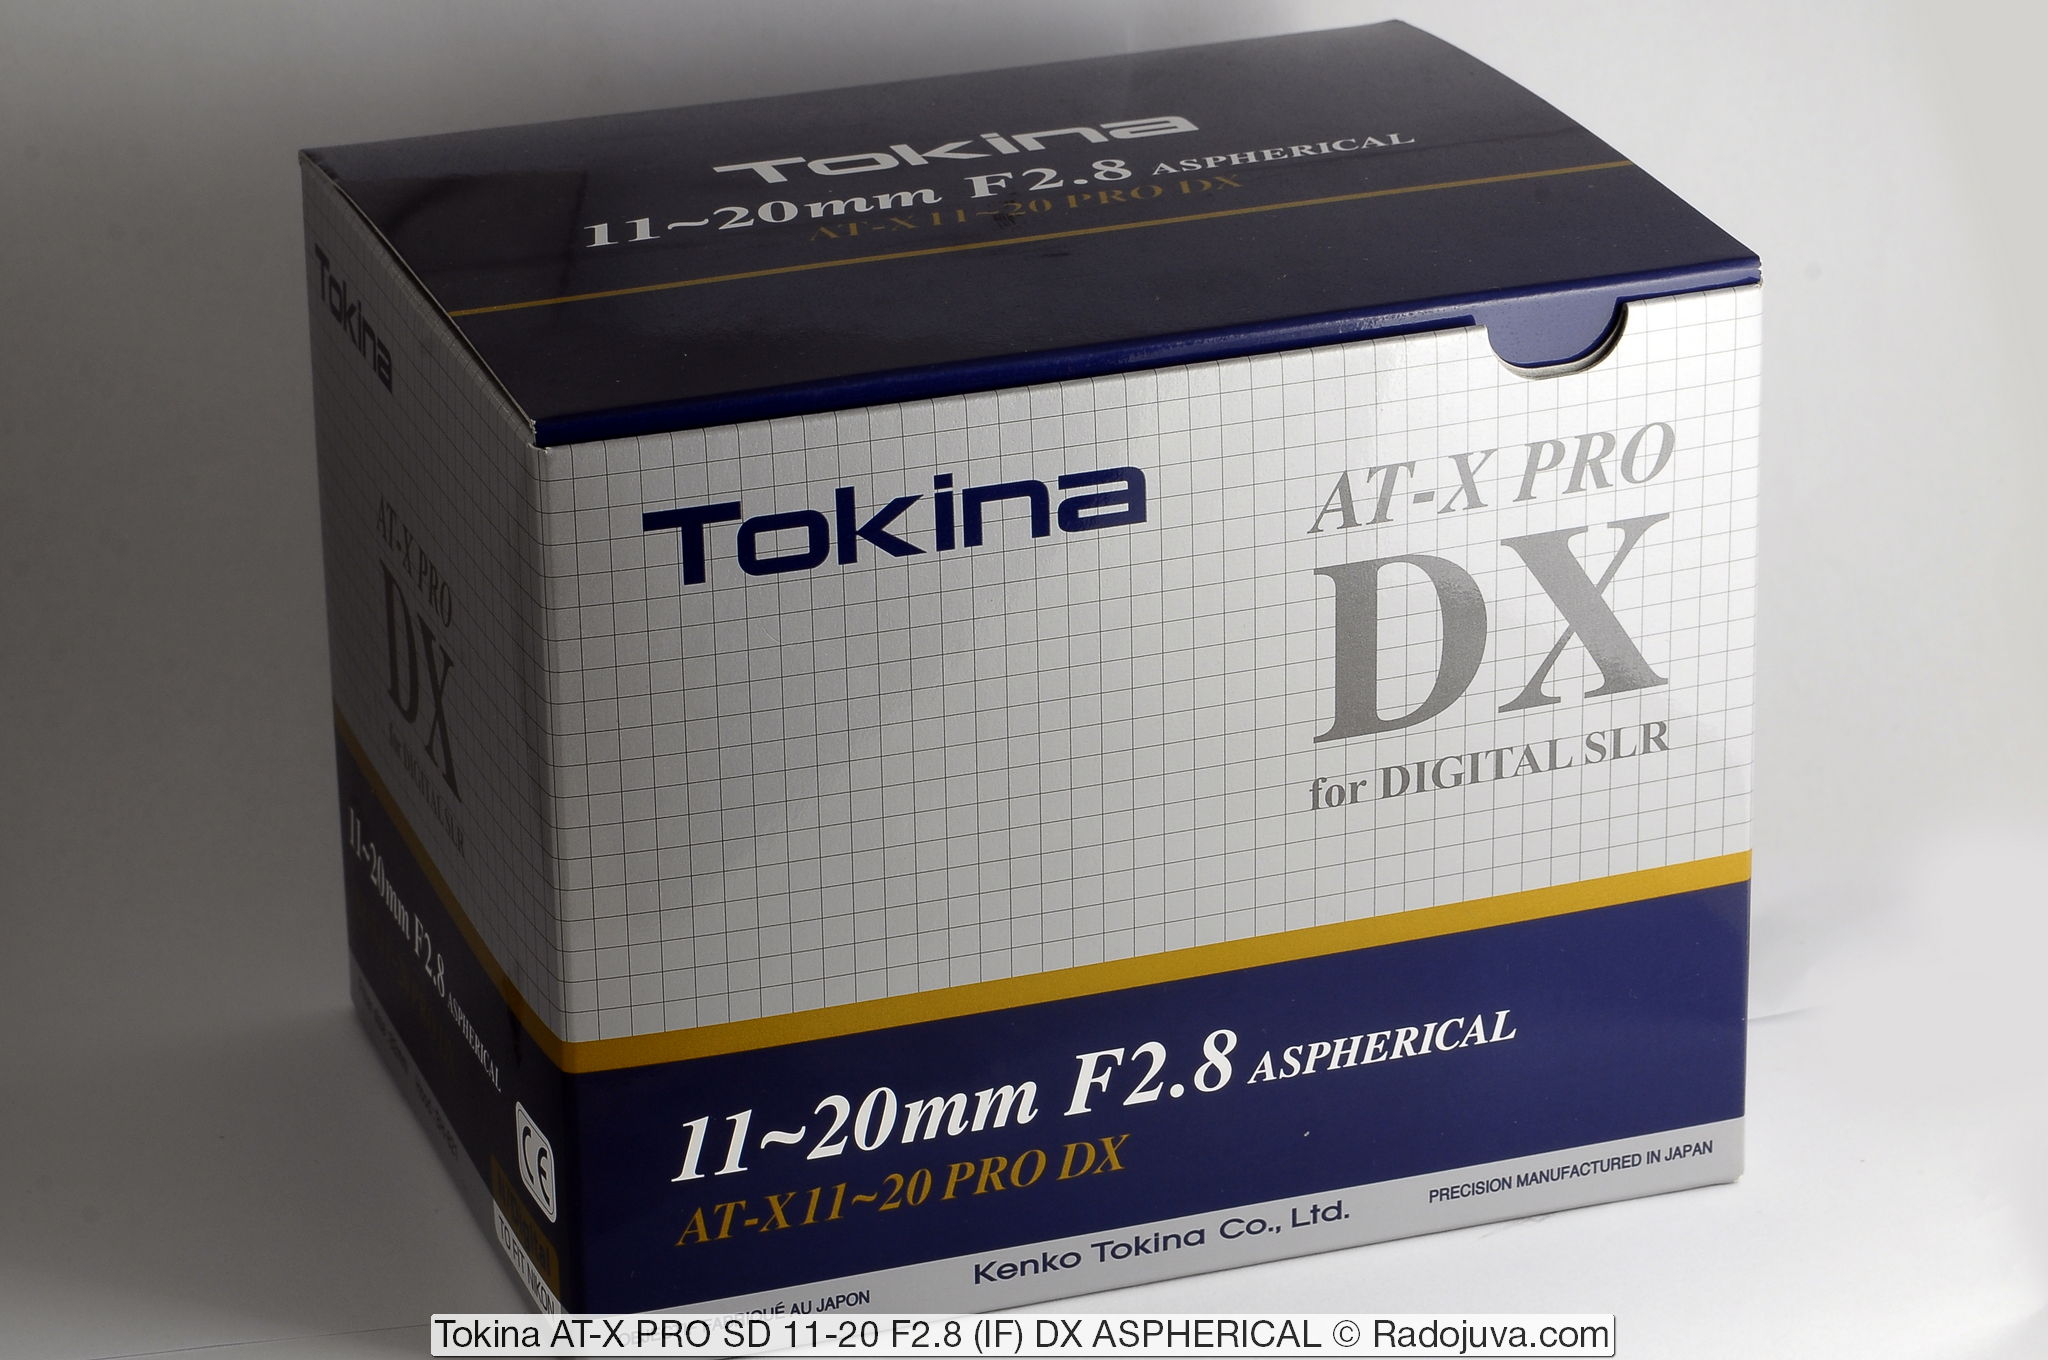 Tokina AT-X PRO SD 11-20 F2.8 (IF) DX ASPHERICAL